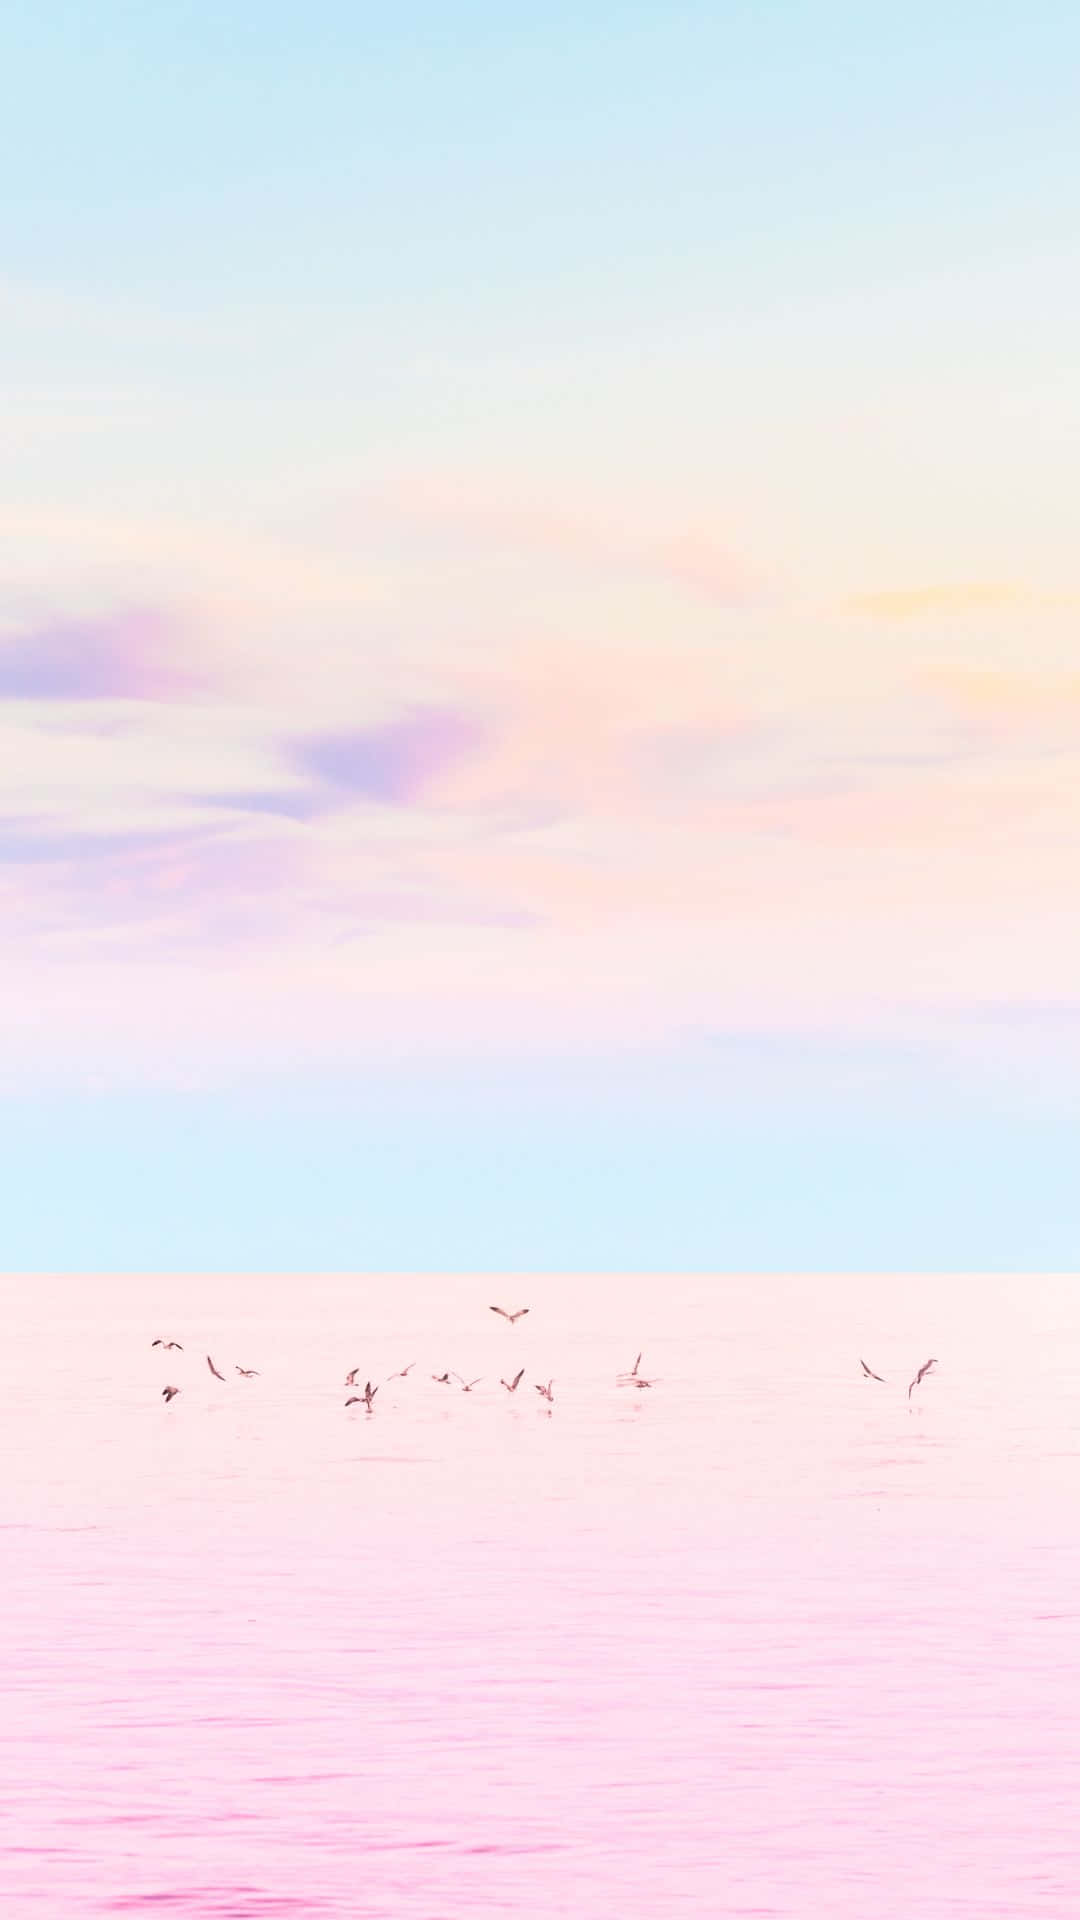 Pink Seagulls Flying Over The Ocean Wallpaper